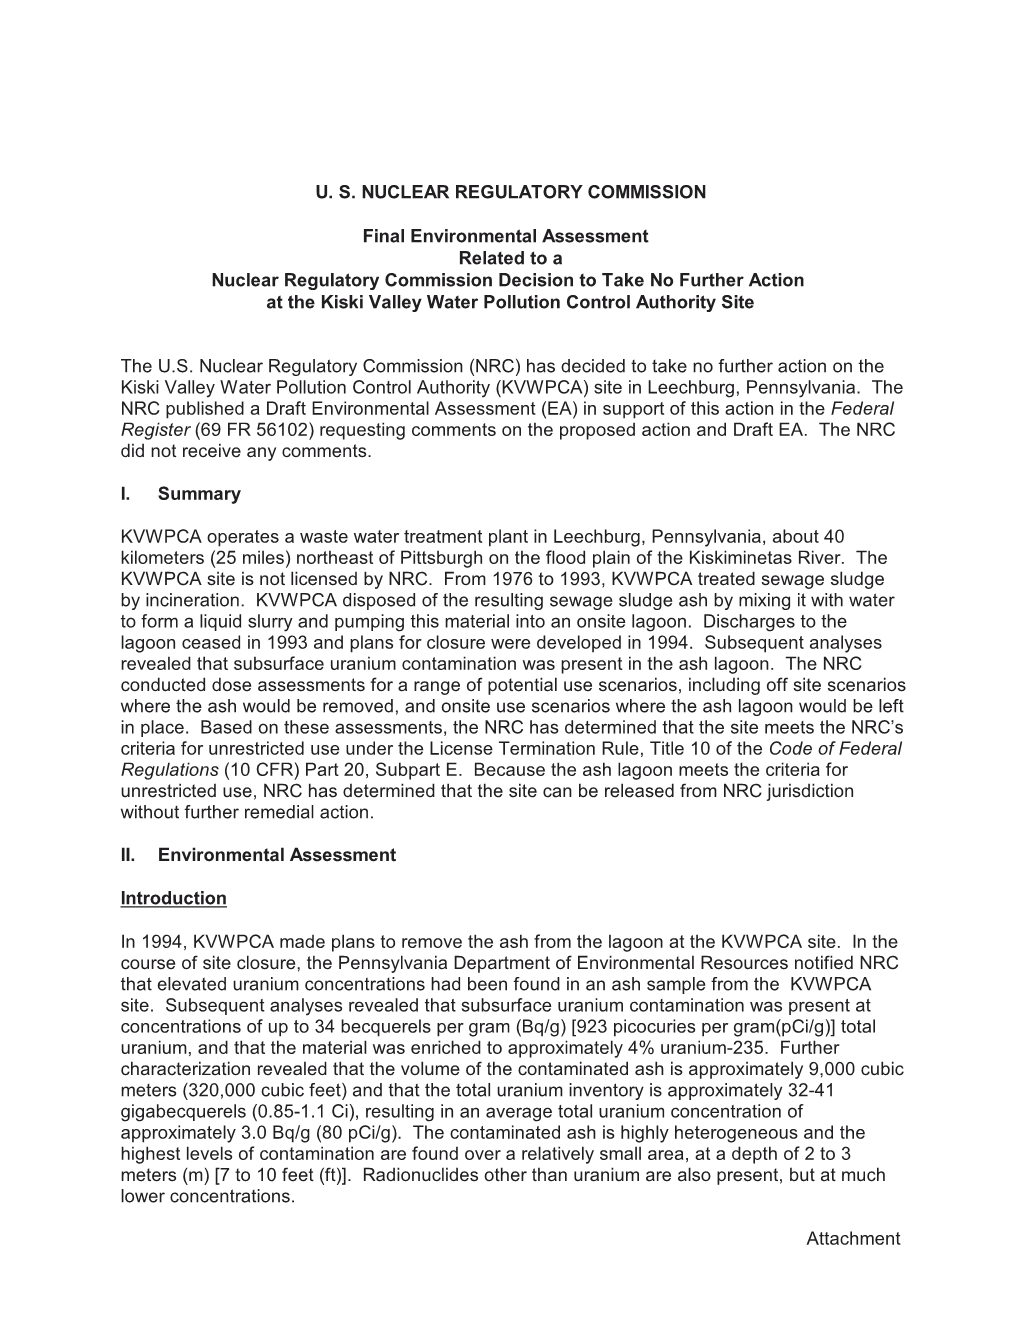 U.S. Nuclear Regulatory Commission Final Environmental Assessment